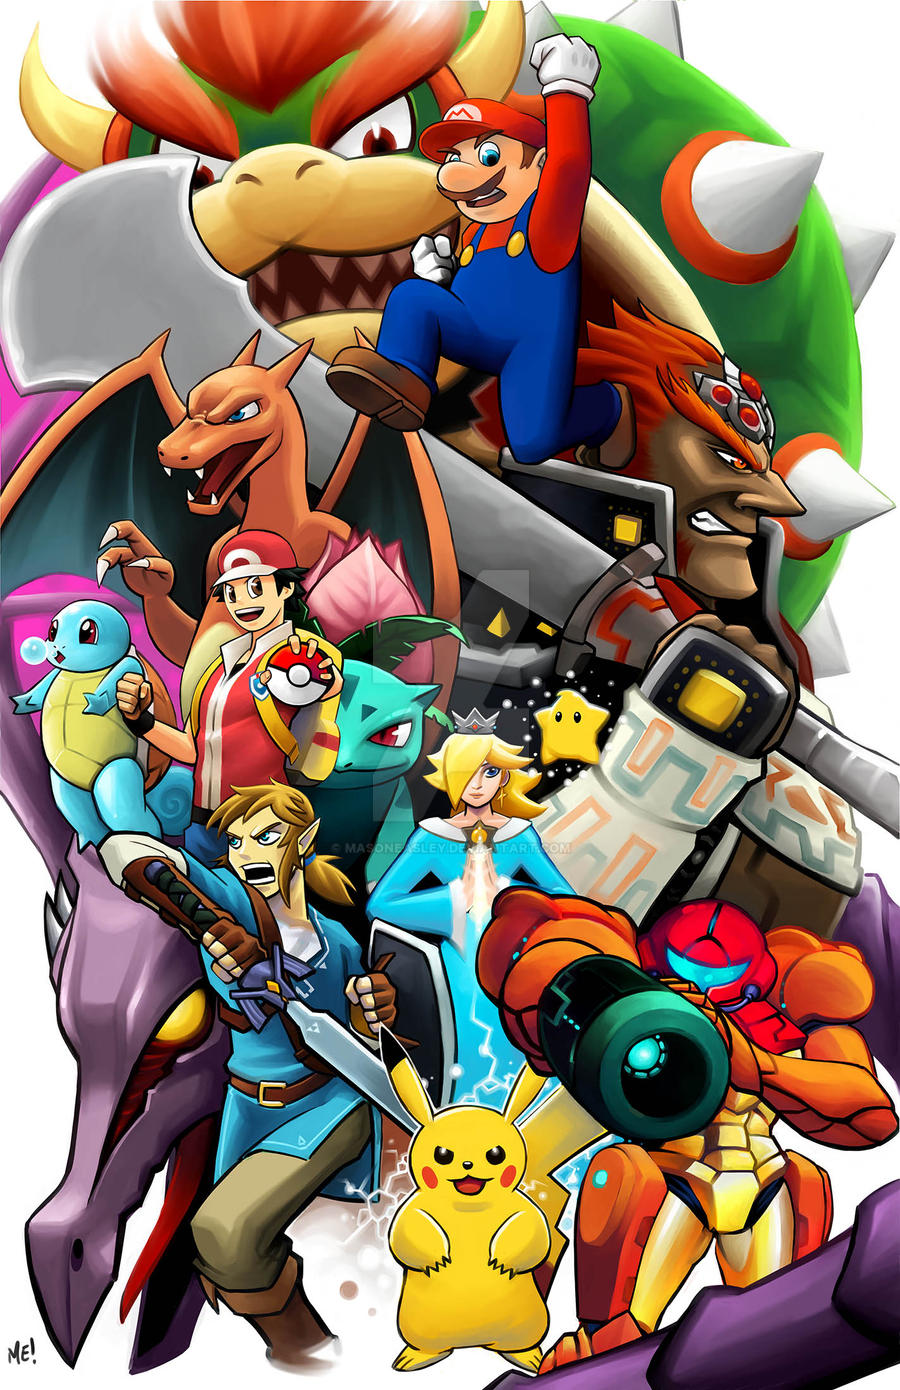 Super Smash Bros. Ultimate by MasonEasley on DeviantArt